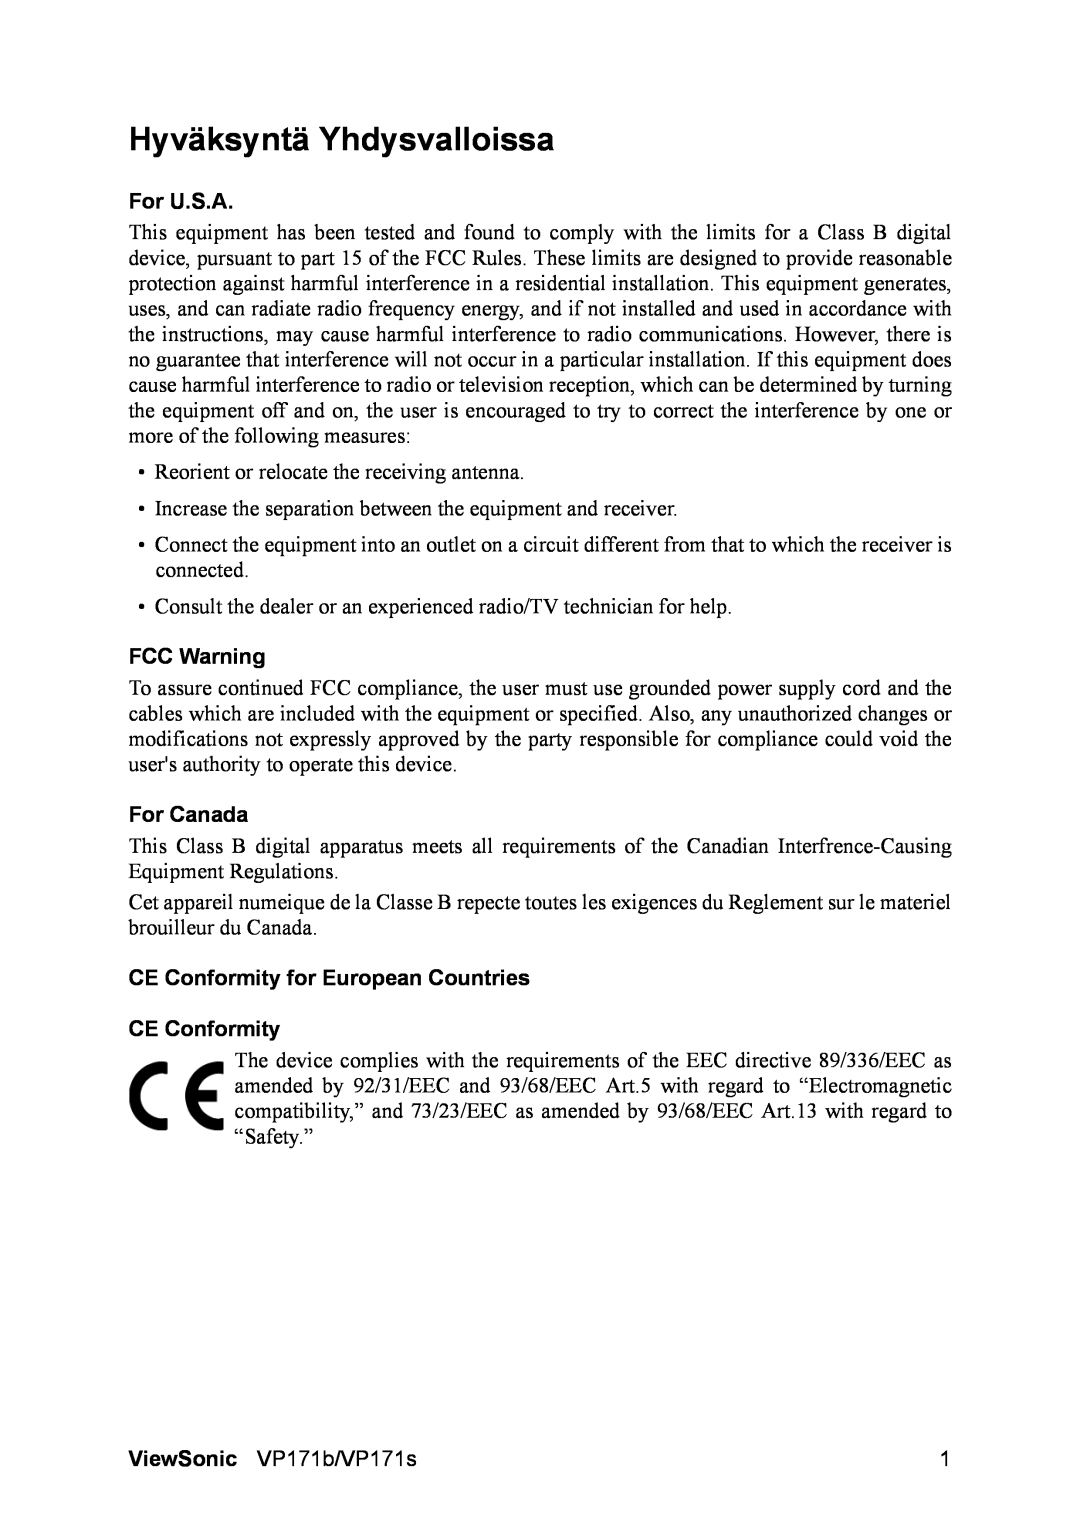 ViewSonic VP171b/VP171s manual Hyväksyntä Yhdysvalloissa, For U.S.A, FCC Warning, For Canada, CE Conformity 